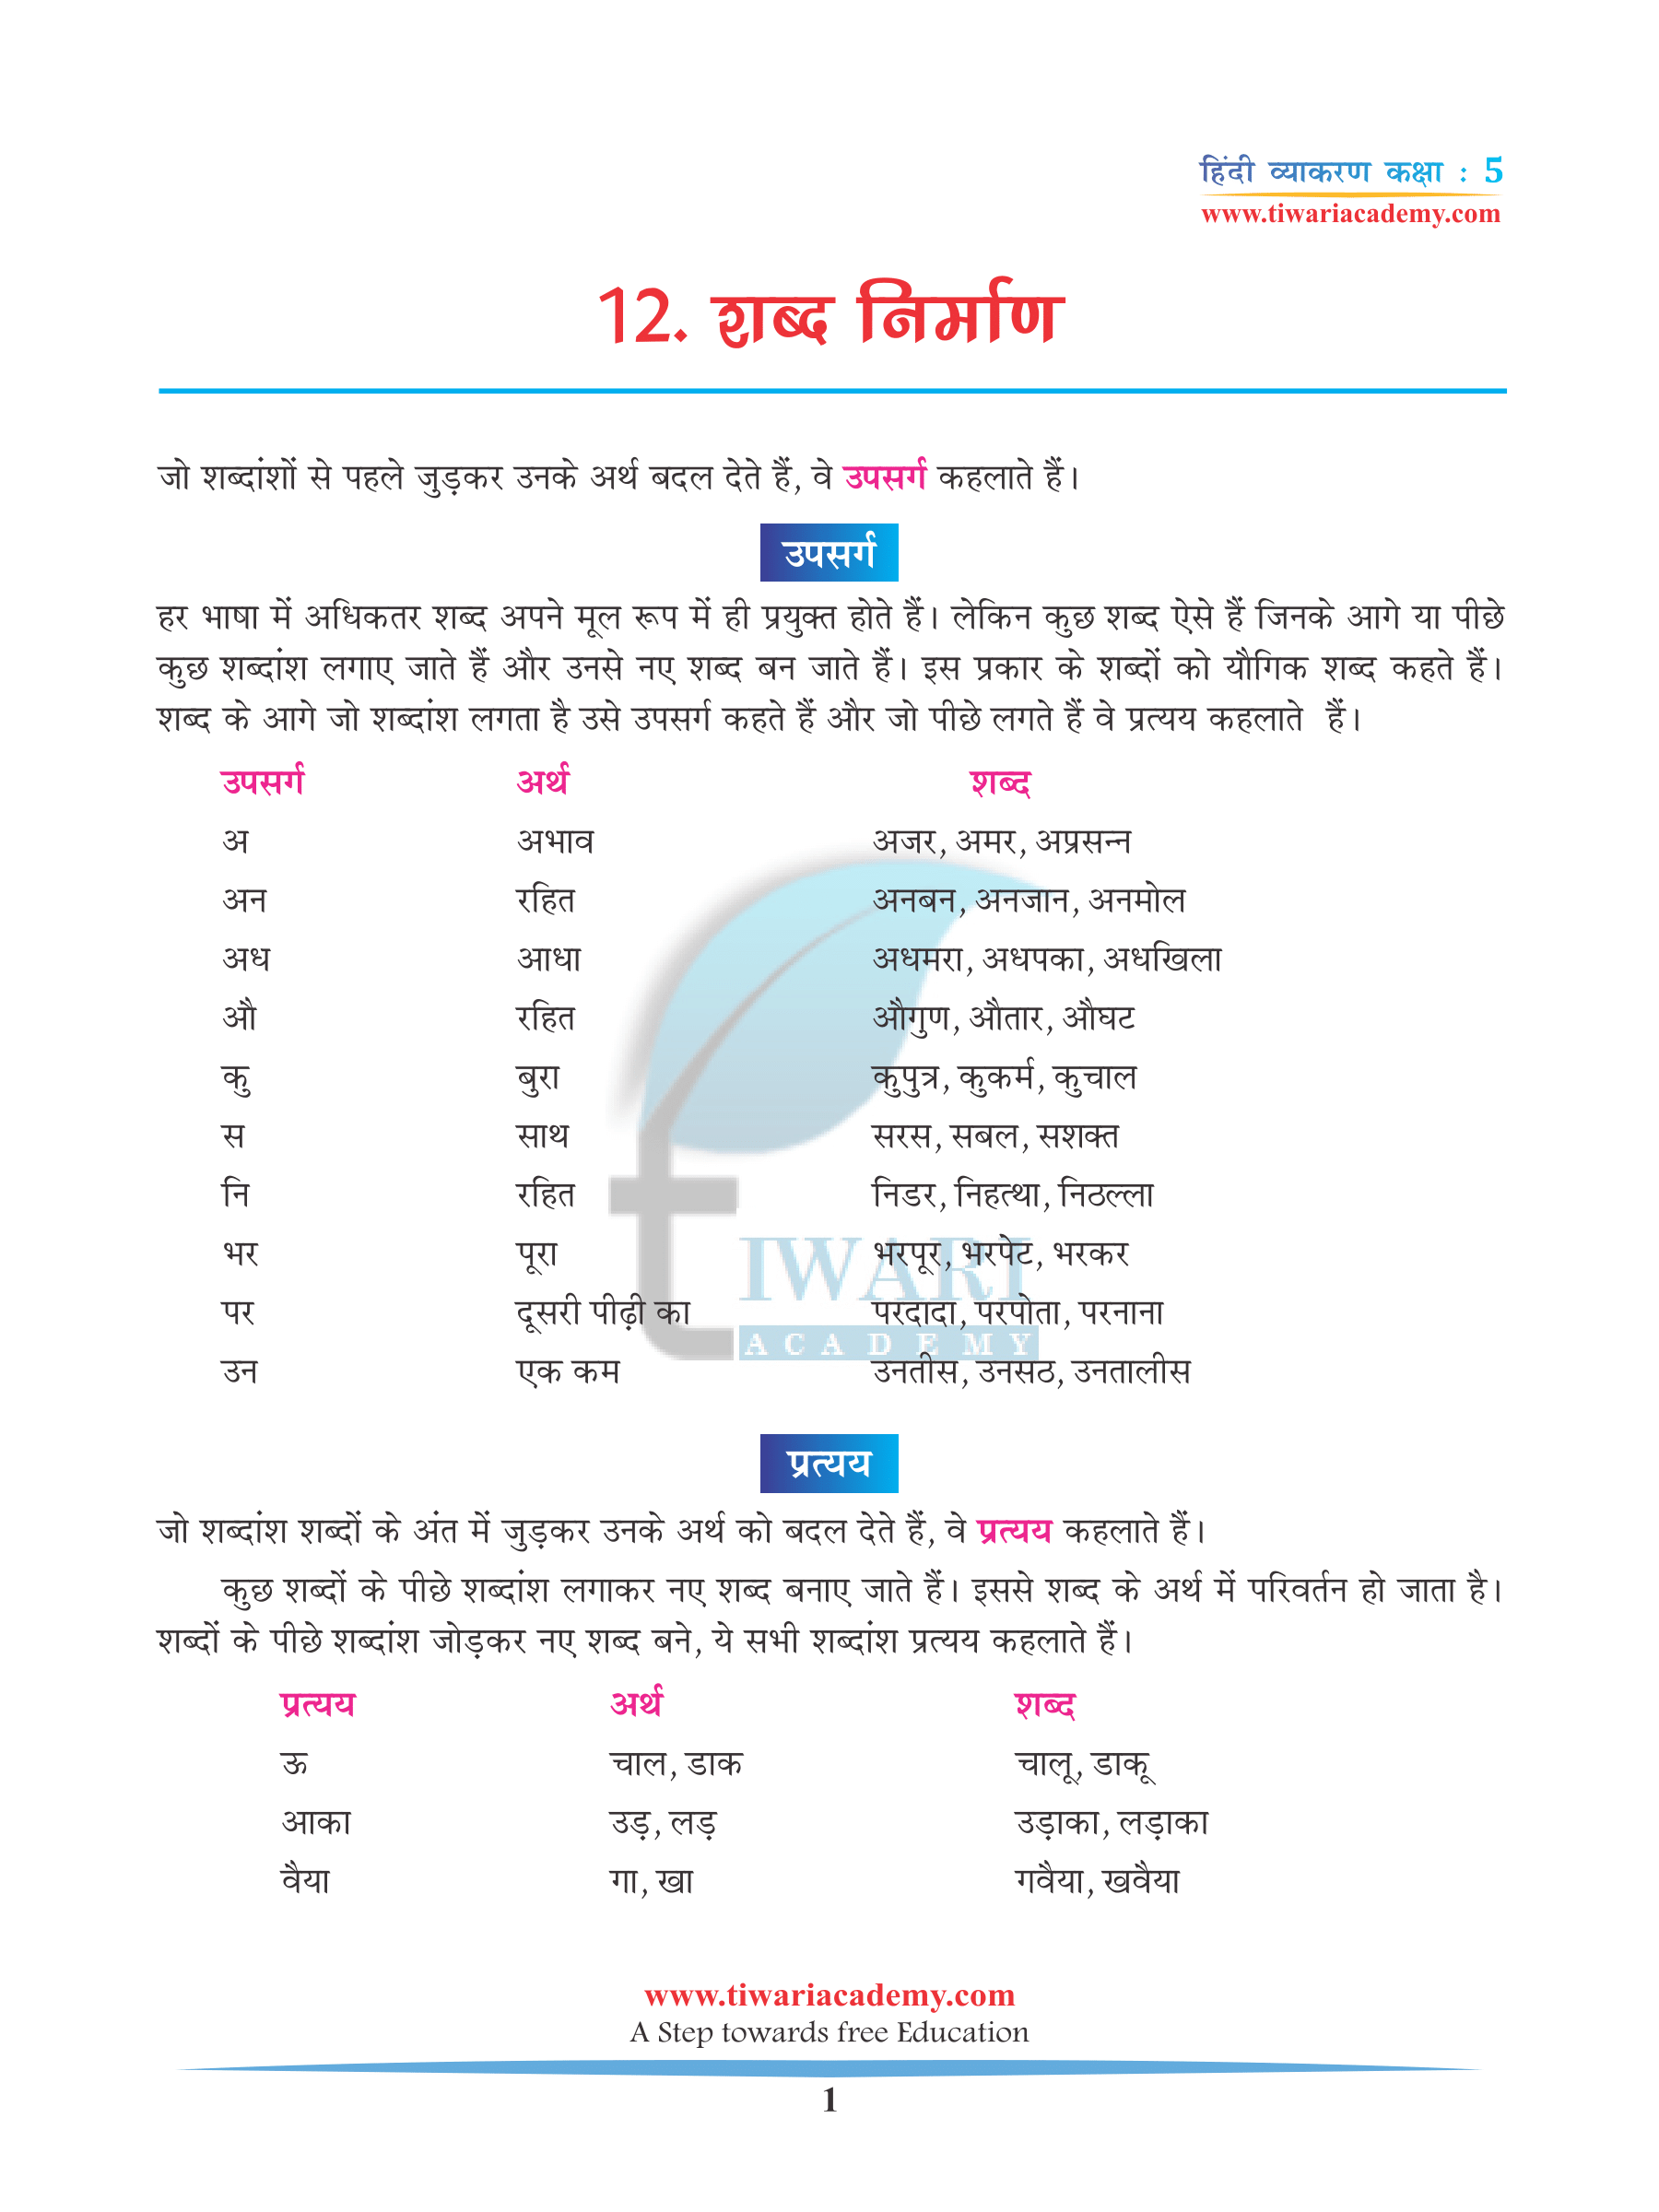 Class 5 Hindi Grammar Chapter 12 Shabd Nirman, Upsarg, Pratyay